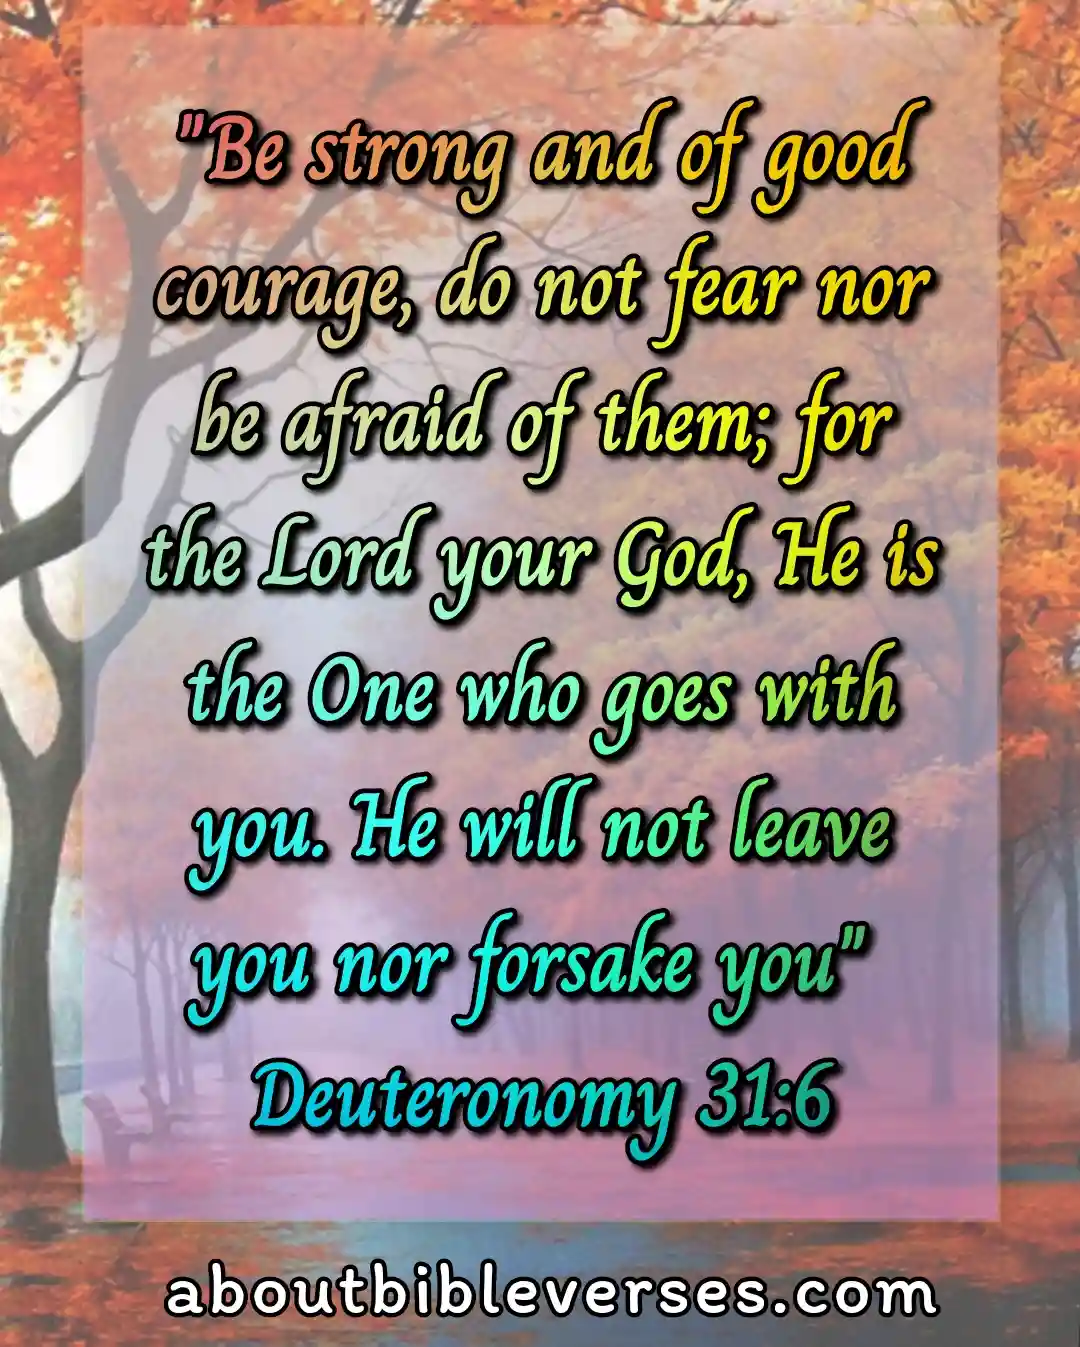 Bible Verses About Adapting To Change (Deuteronomy 31:6)